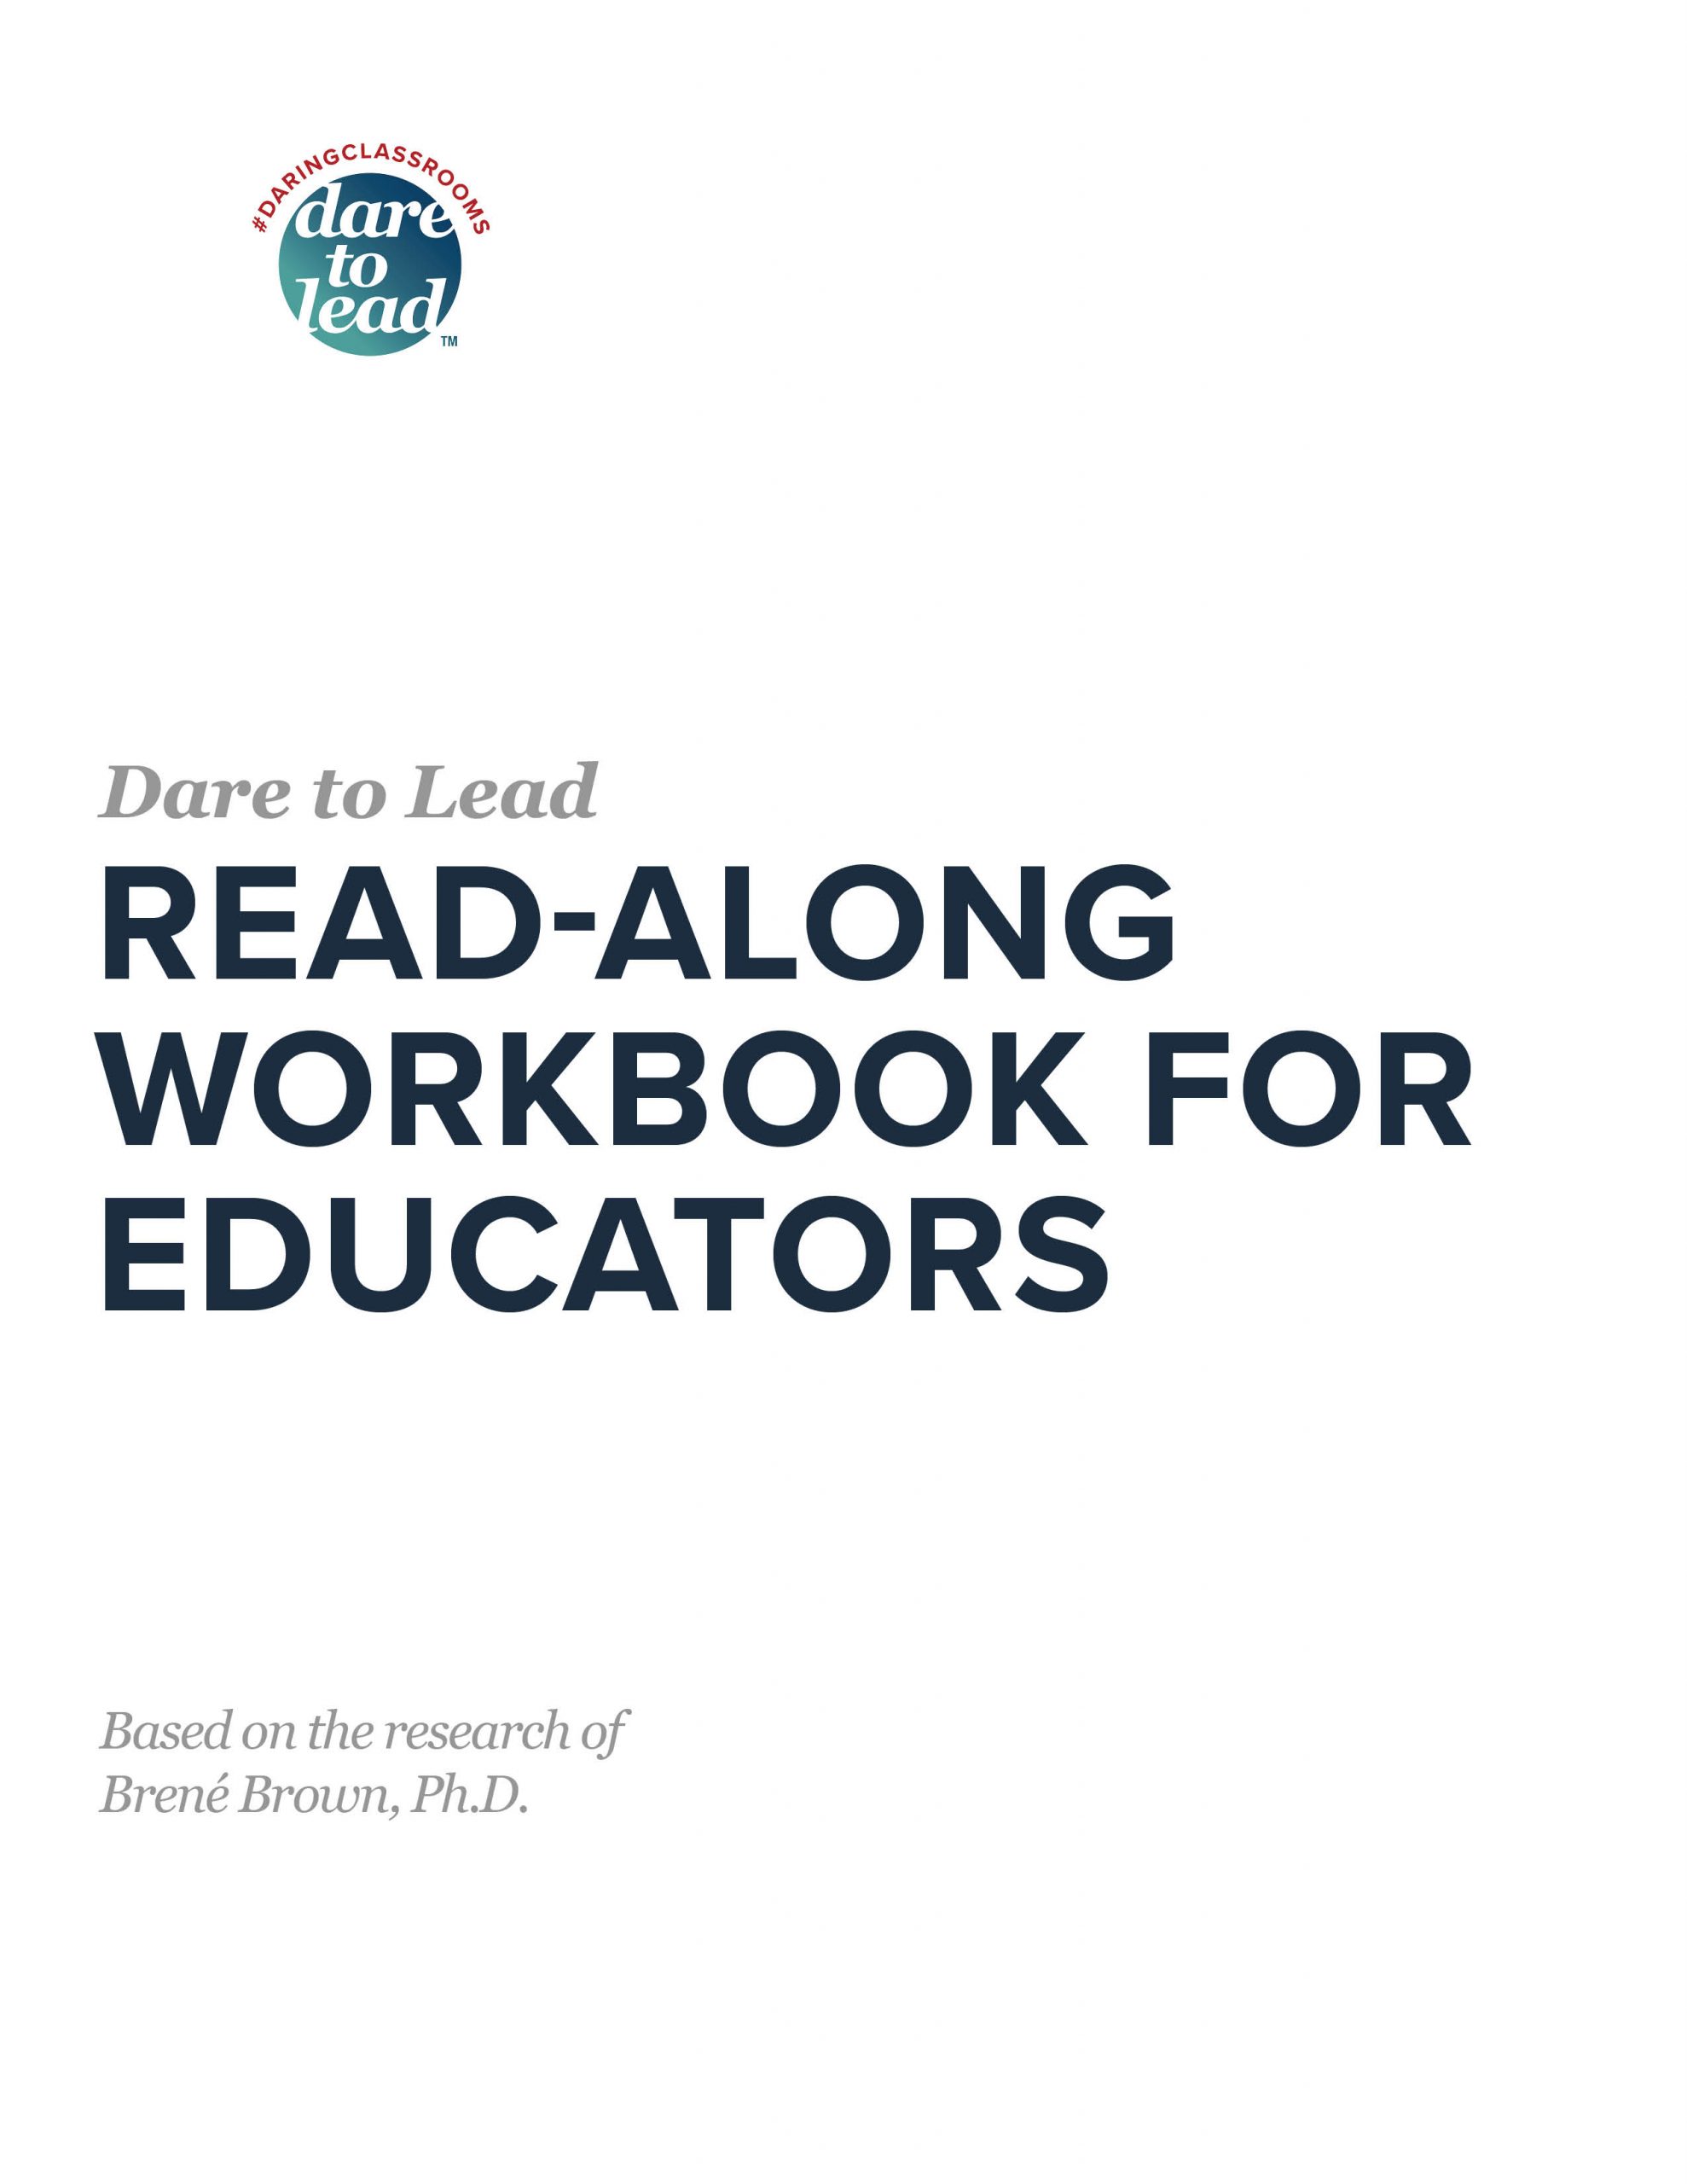 Dare to Lead Read Along Workbook for Educators